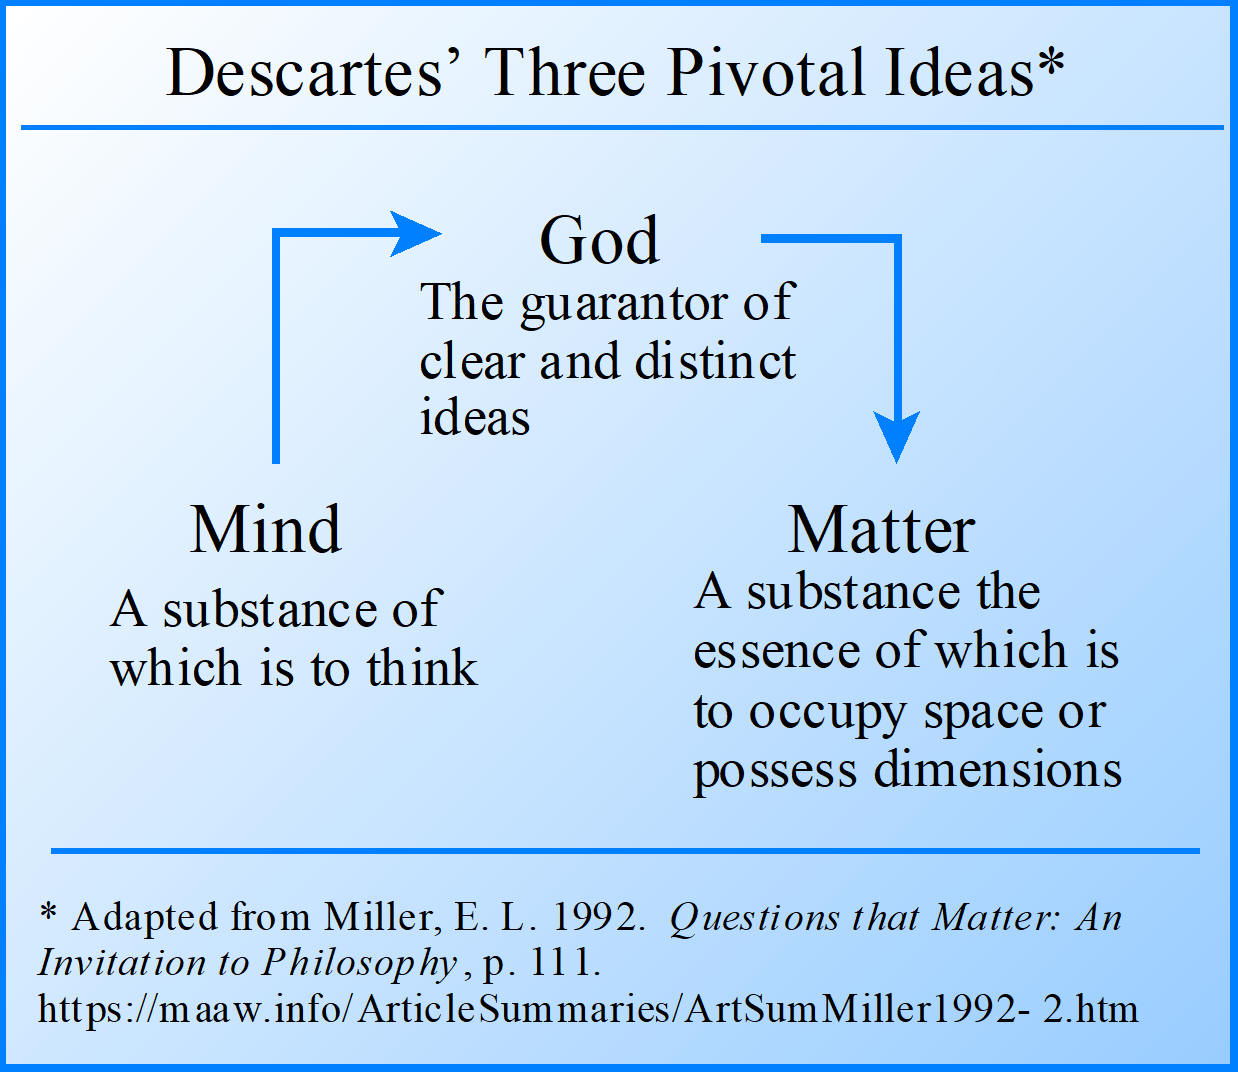 Descartes' Three Pivotal Ideas